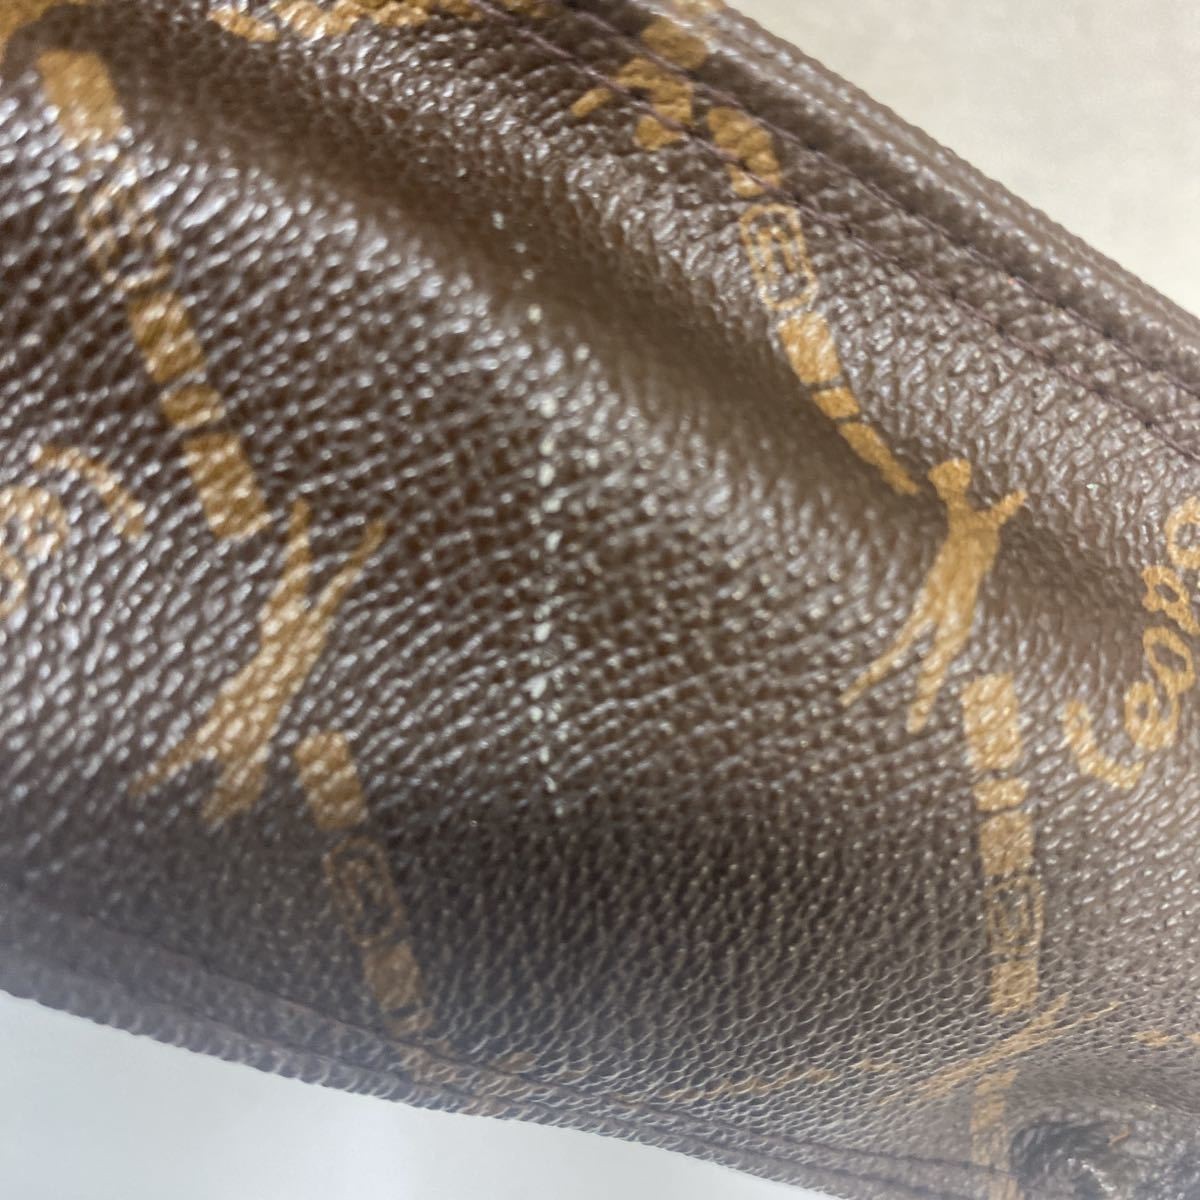  Leopard clutch Bag * free shipping 